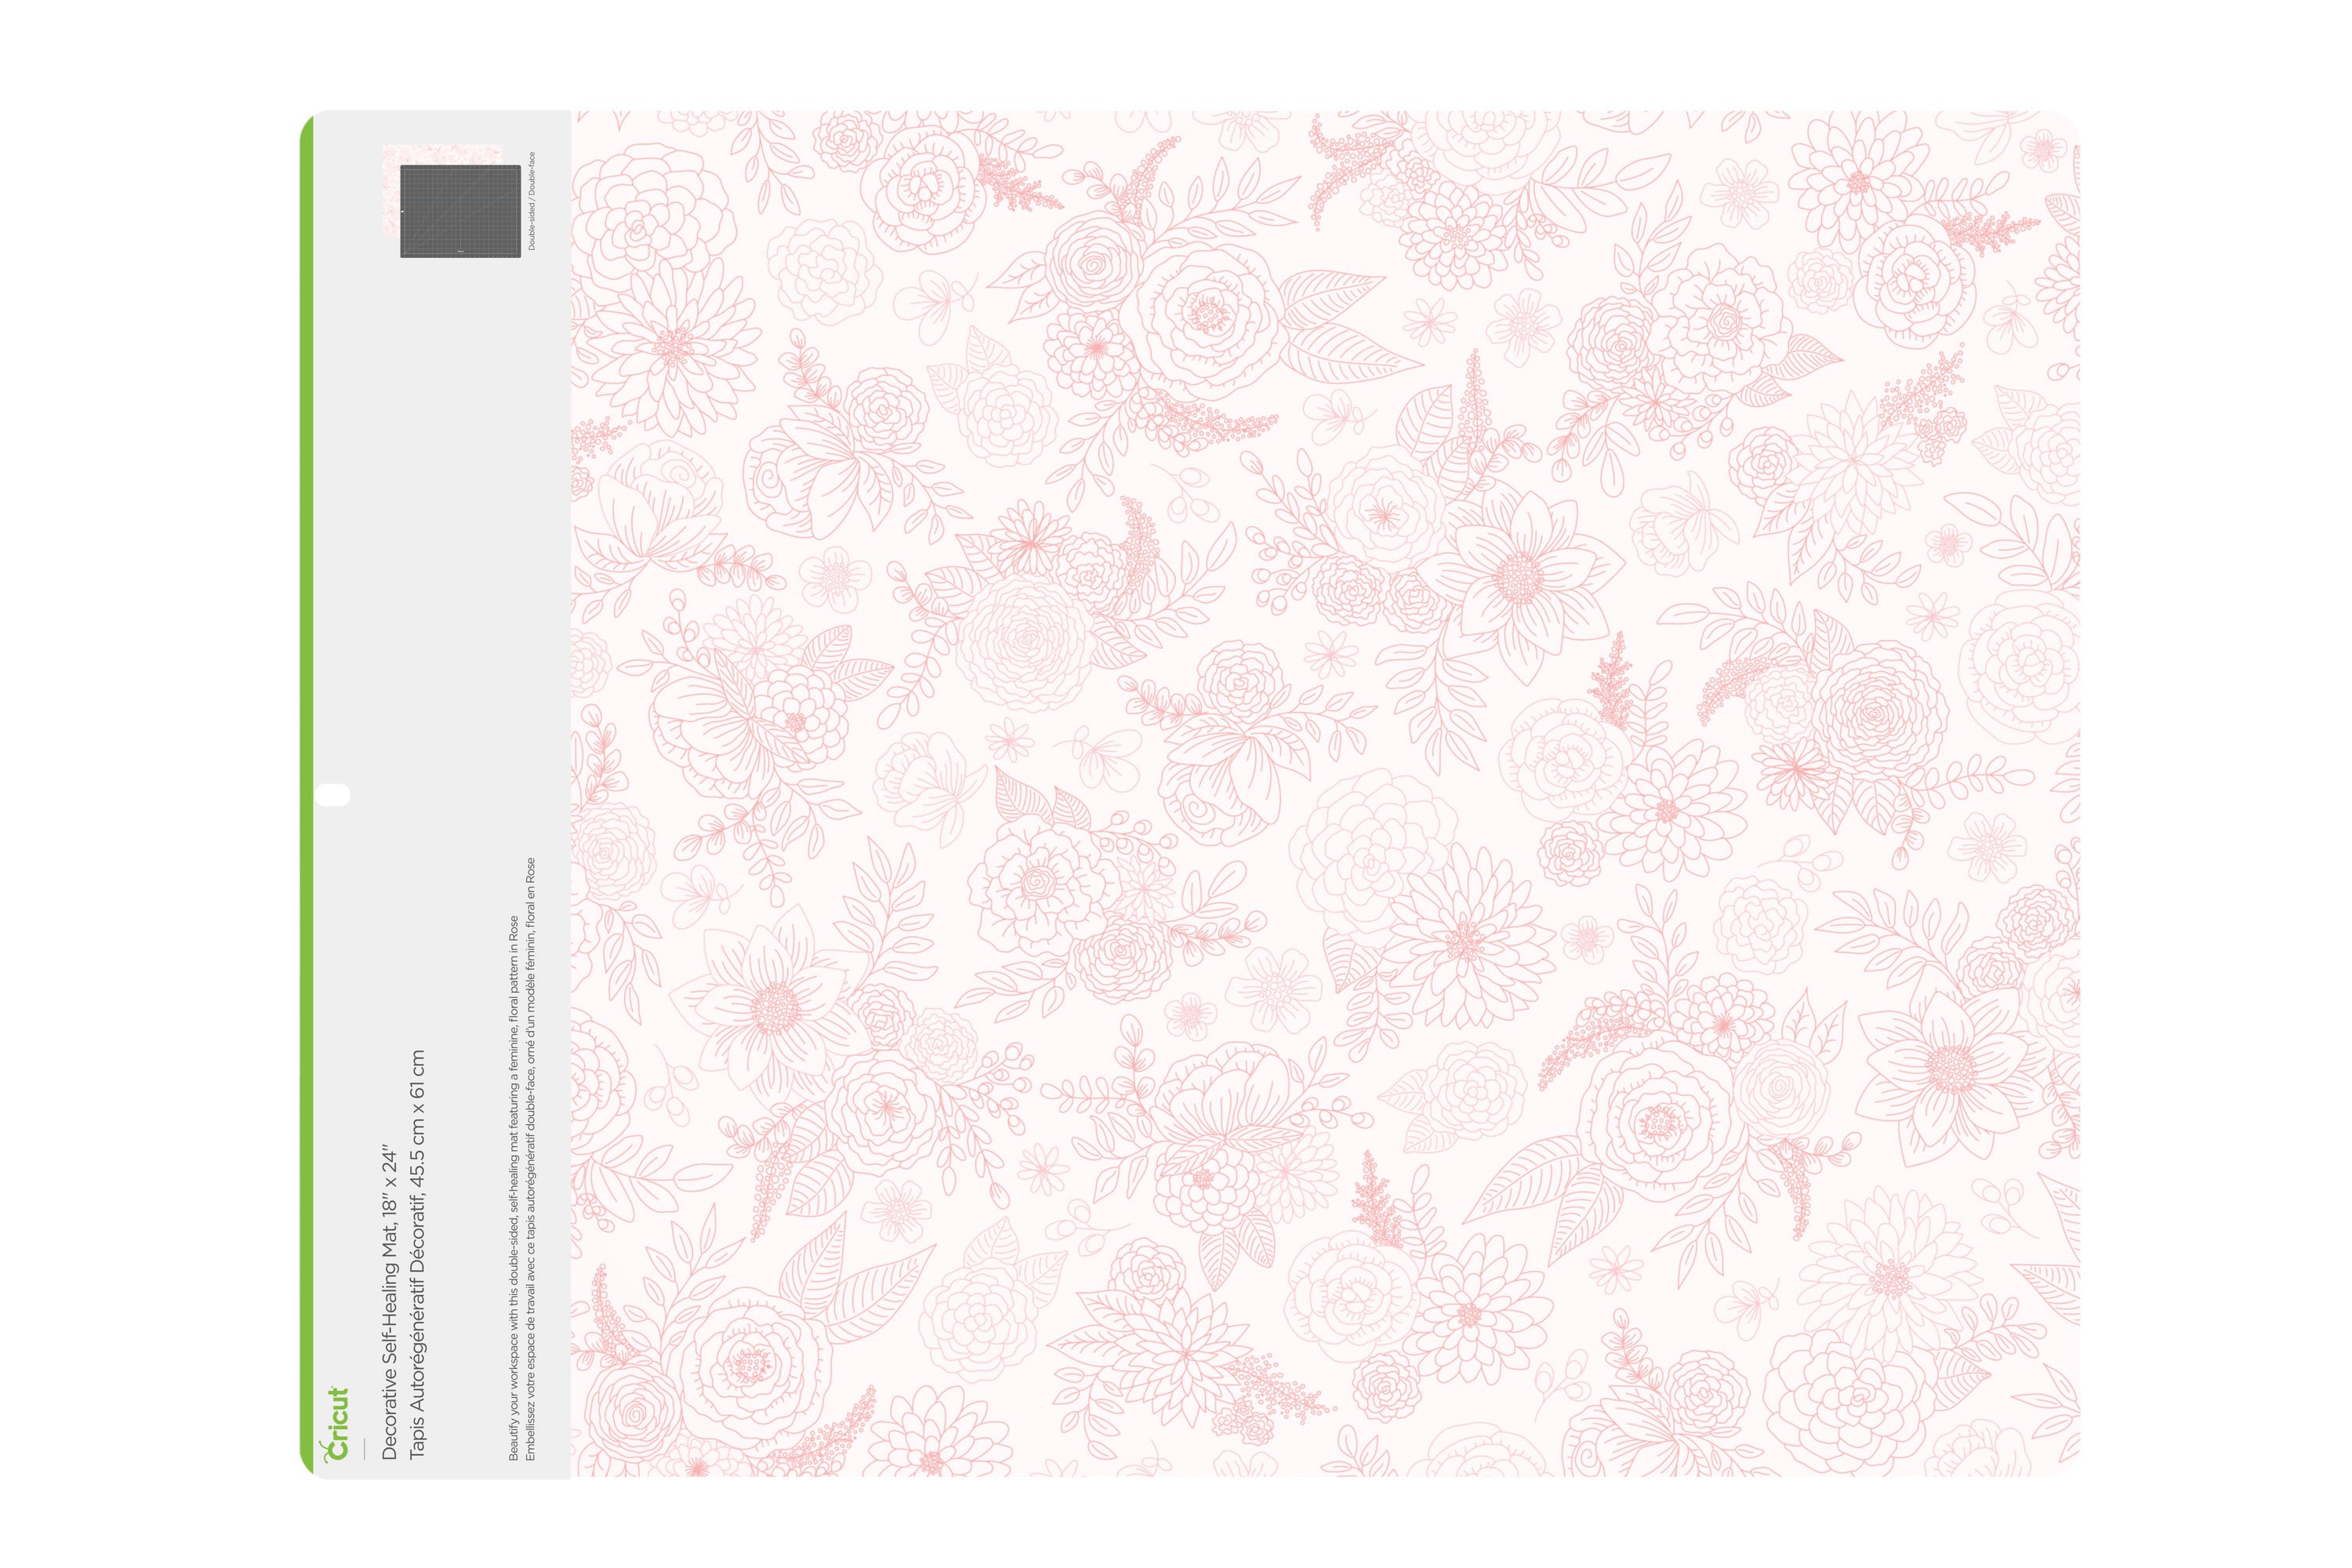 Pink Cricut Expression Bundle includes the Pink Journey - Cricut Cartridge  Library